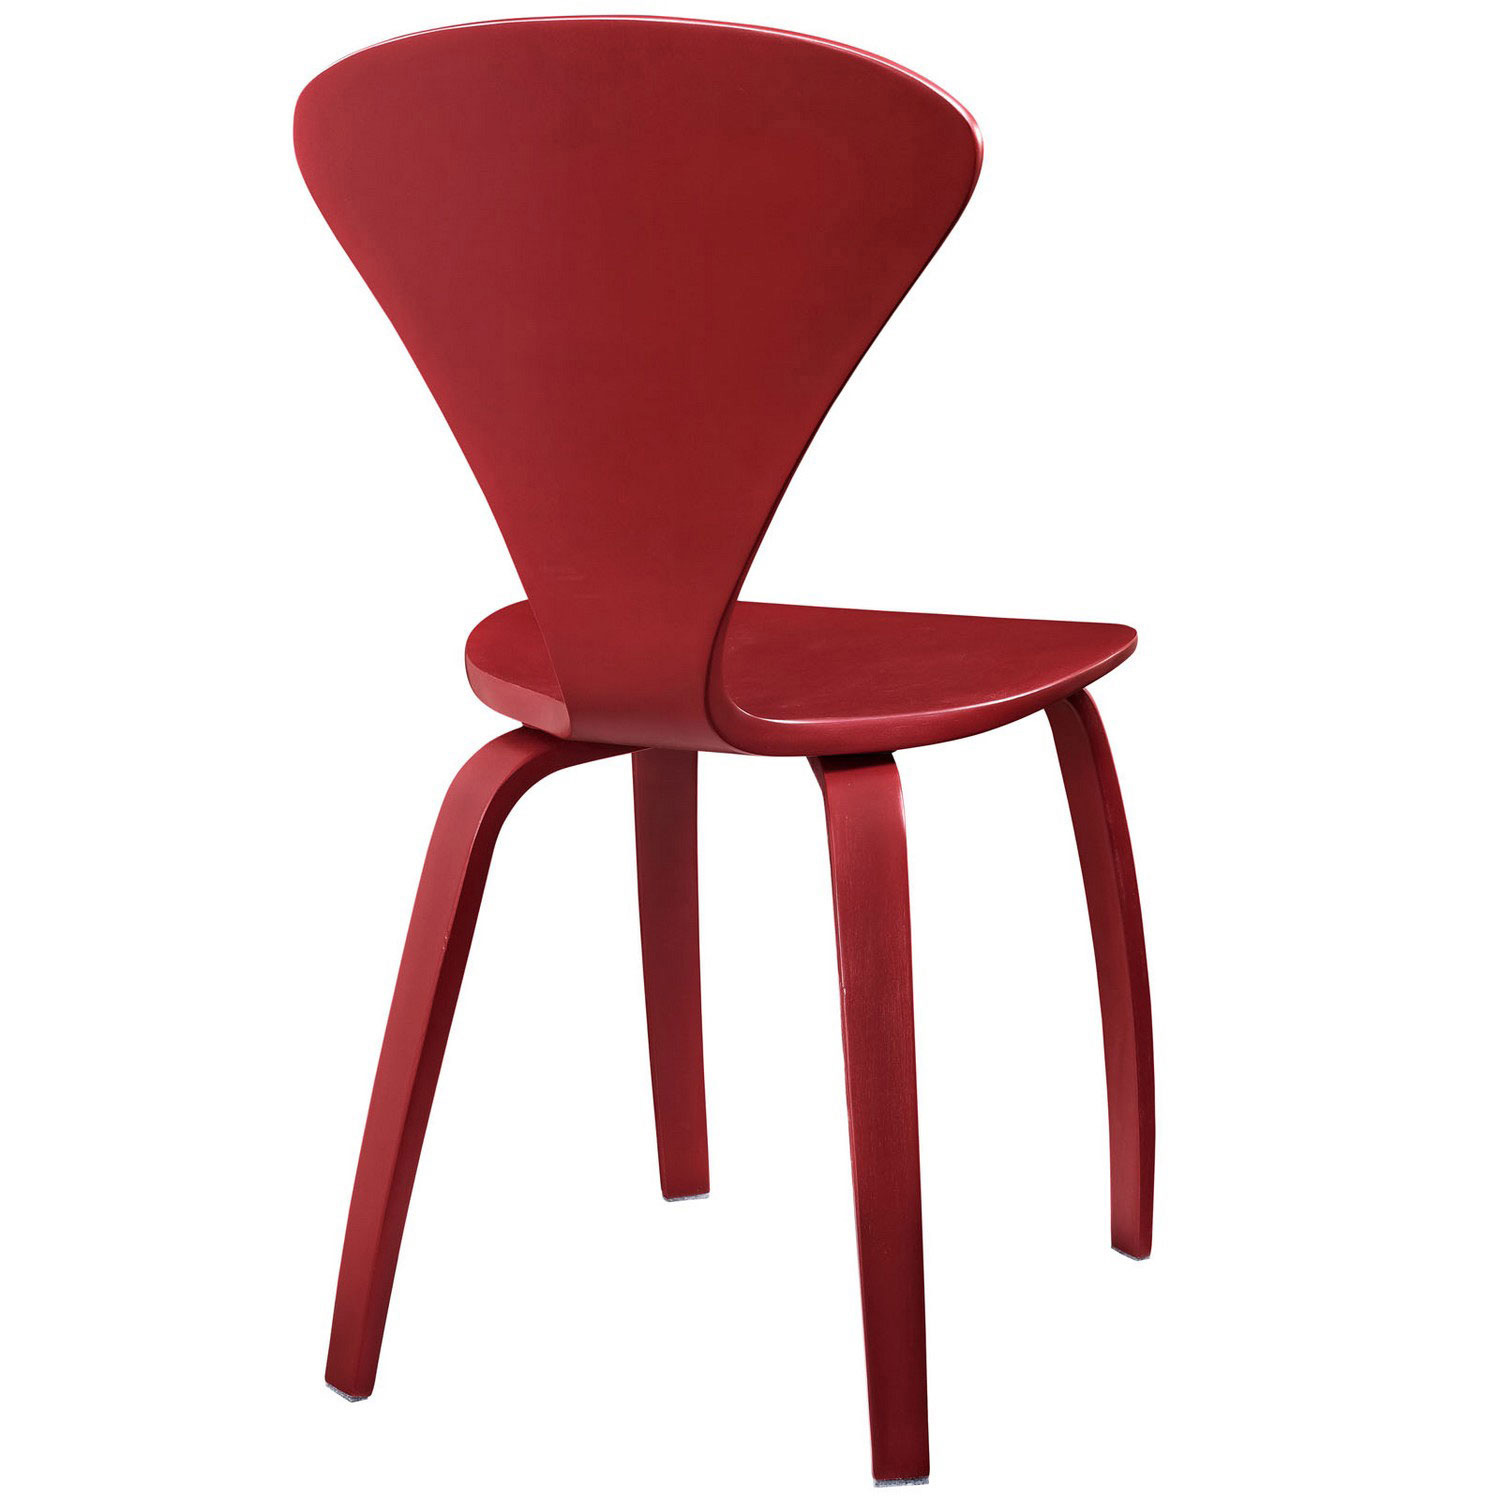 Modway Vortex Dining Side Chair - Red